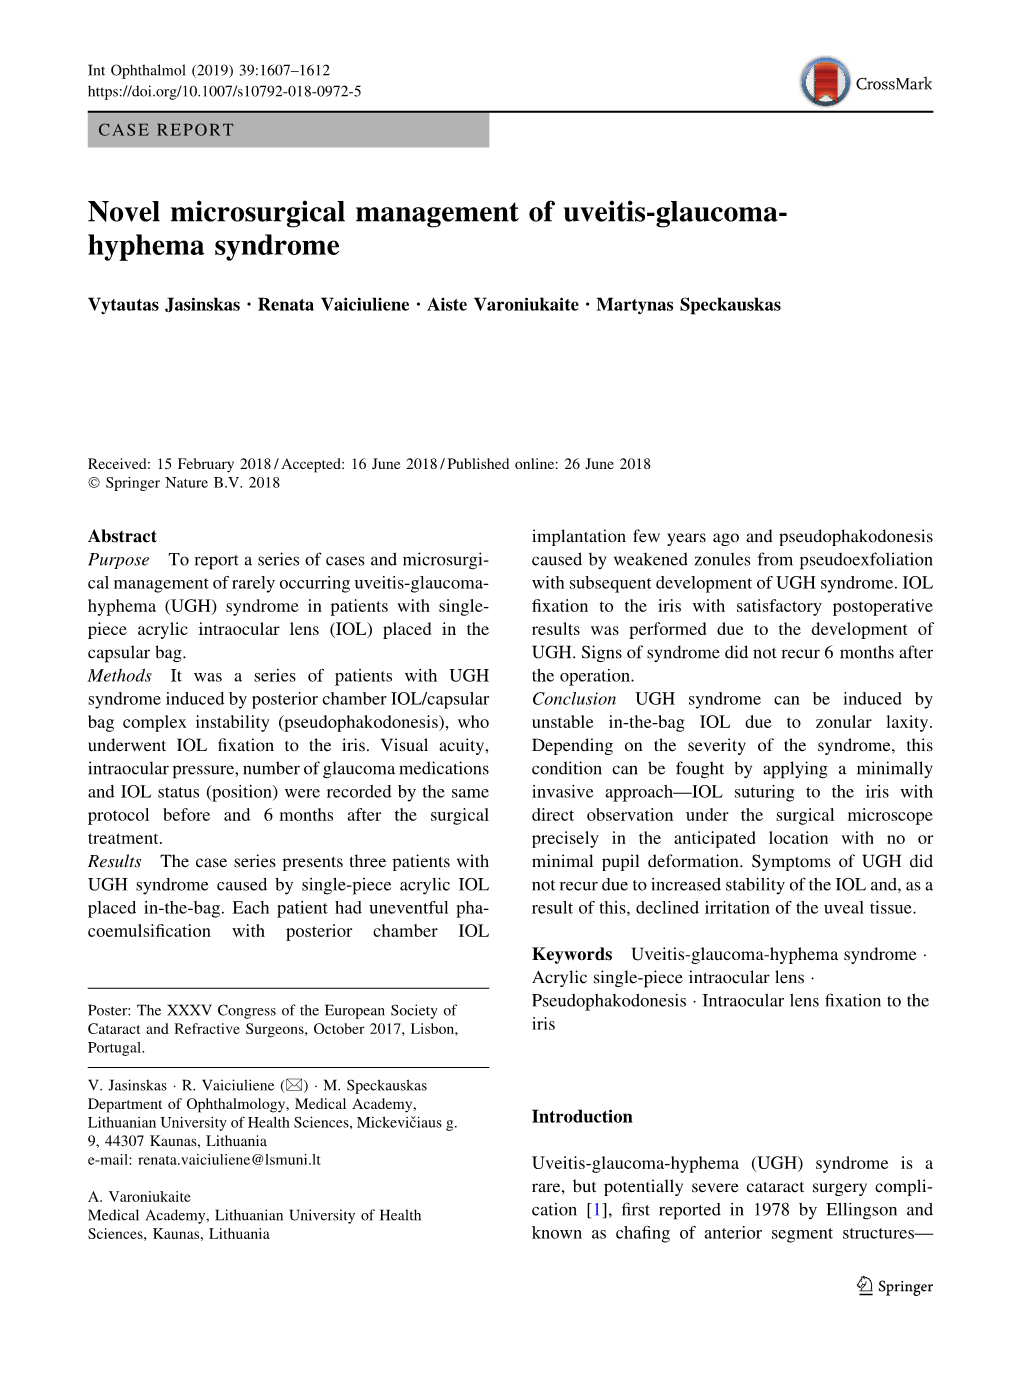 Novel Microsurgical Management of Uveitis-Glaucoma-Hyphema Syndrome